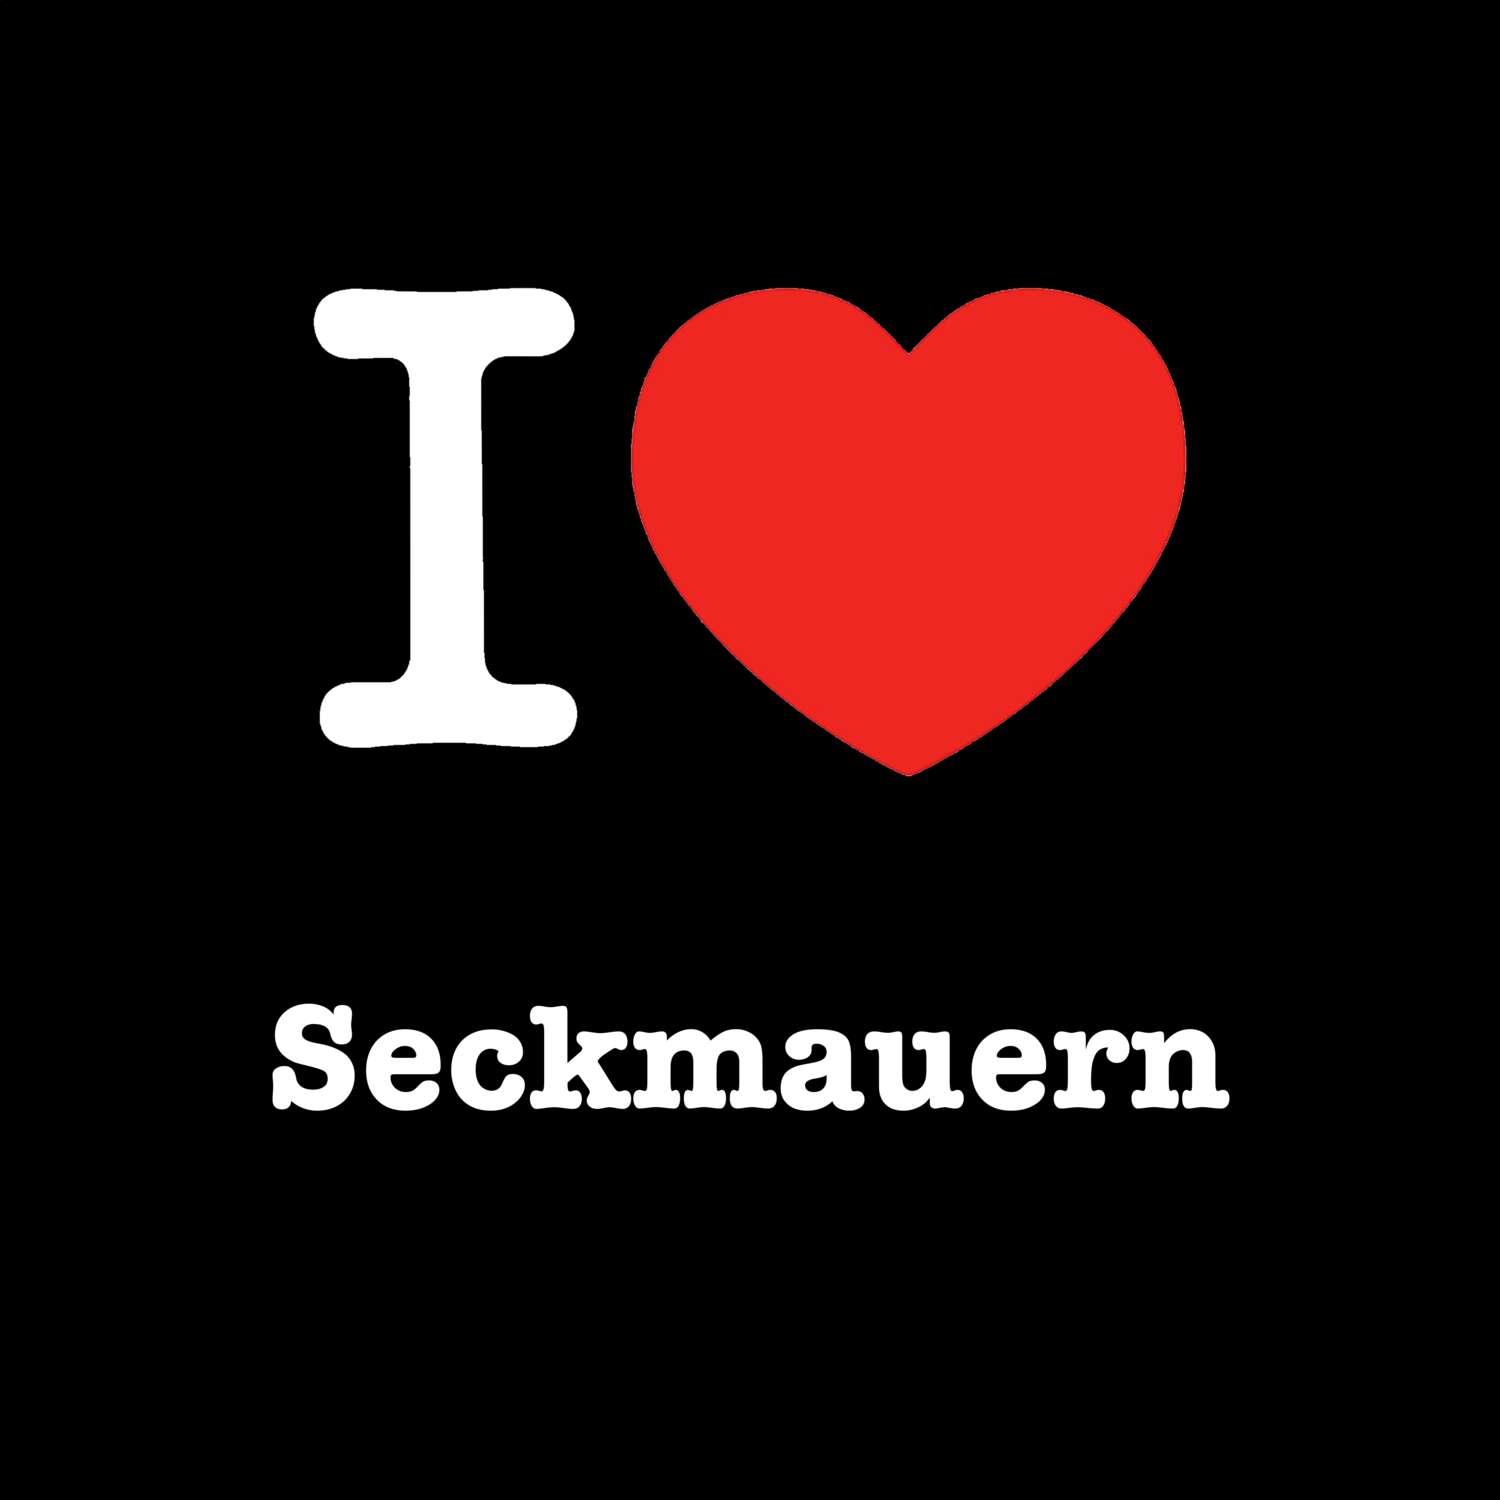 Seckmauern T-Shirt »I love«